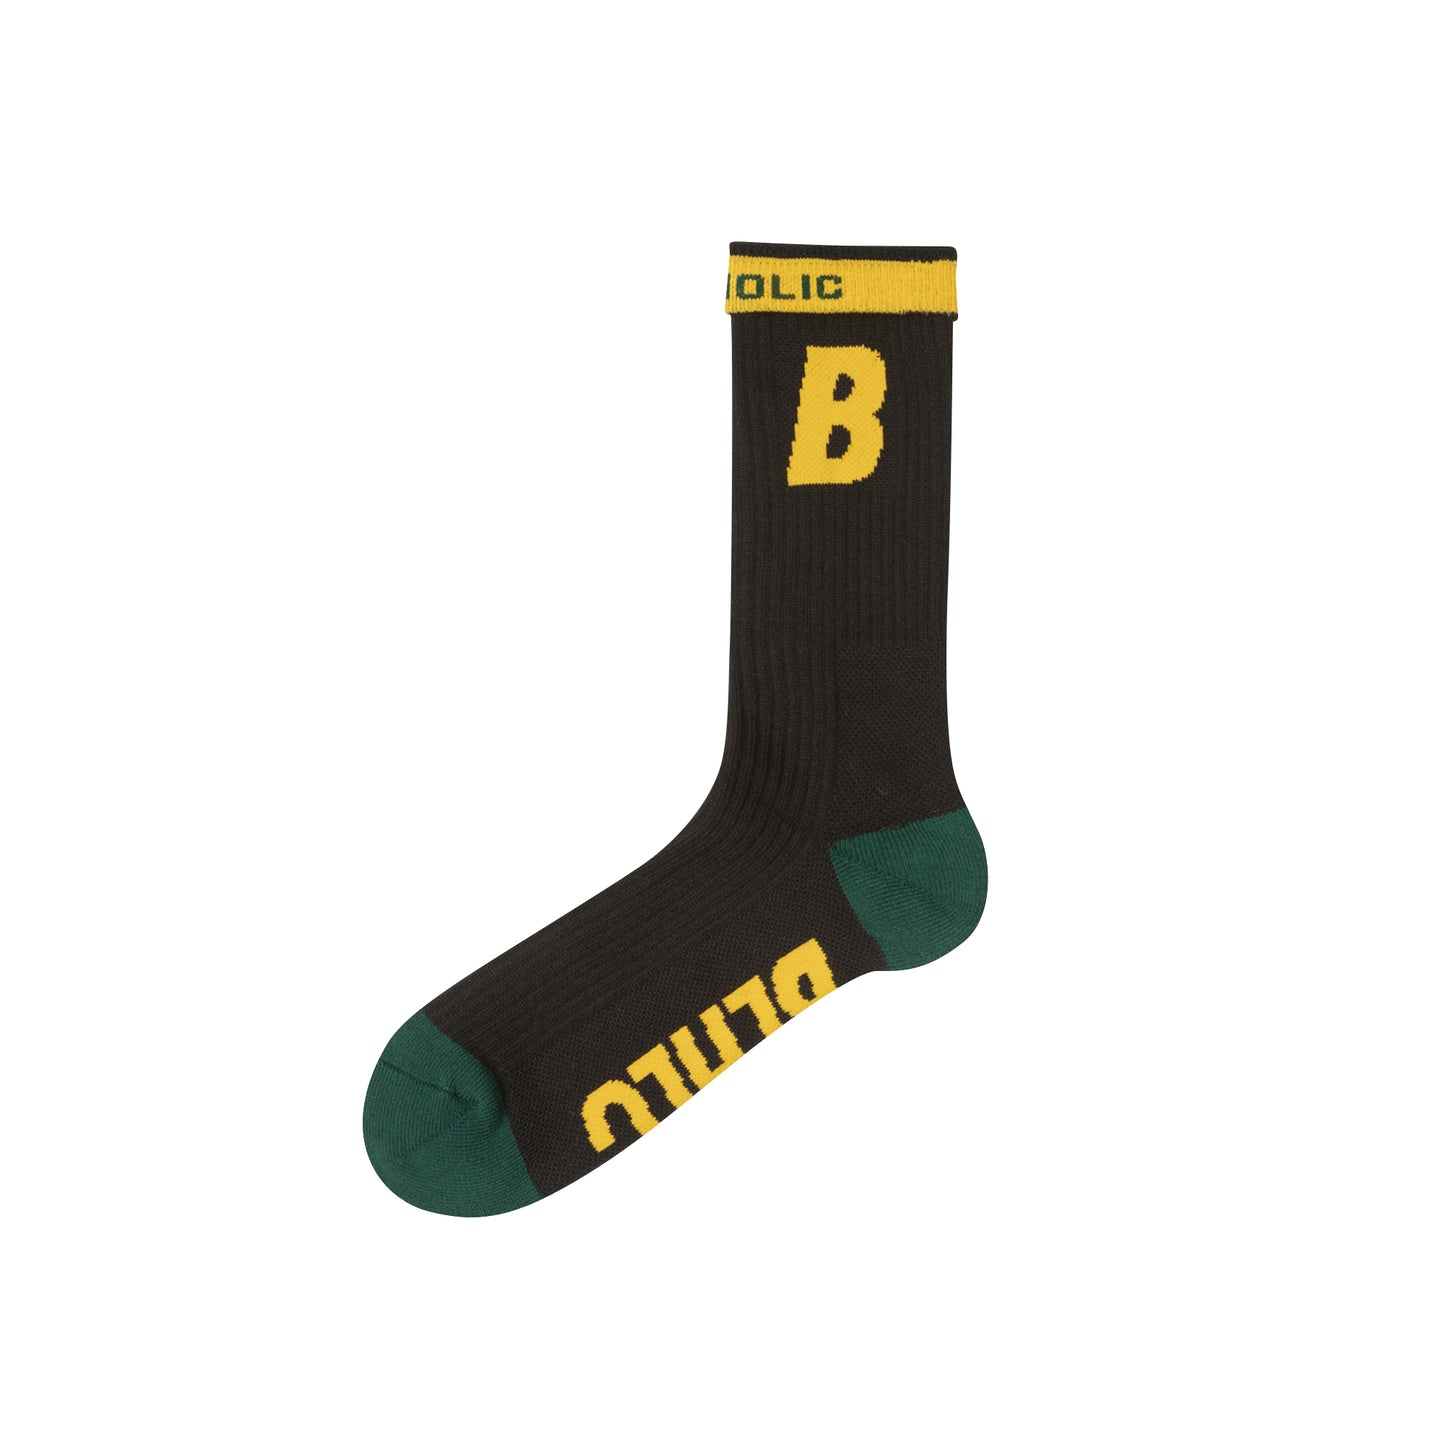 B Socks (black/yellow/dark green)